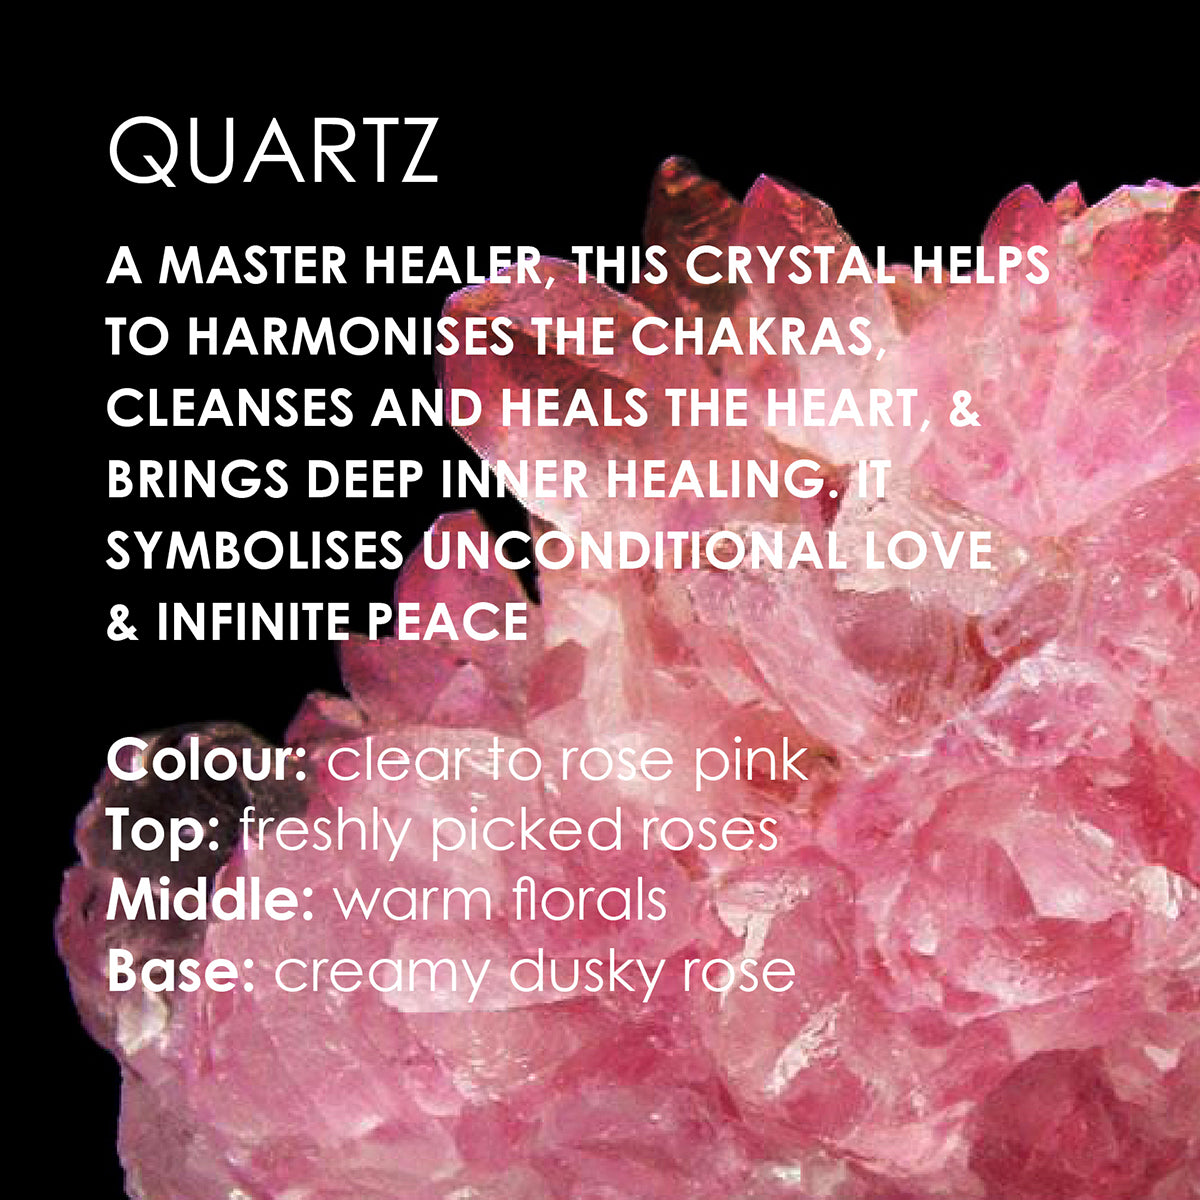 A graphic image of Quartz and text description of the properties of Quartz stone